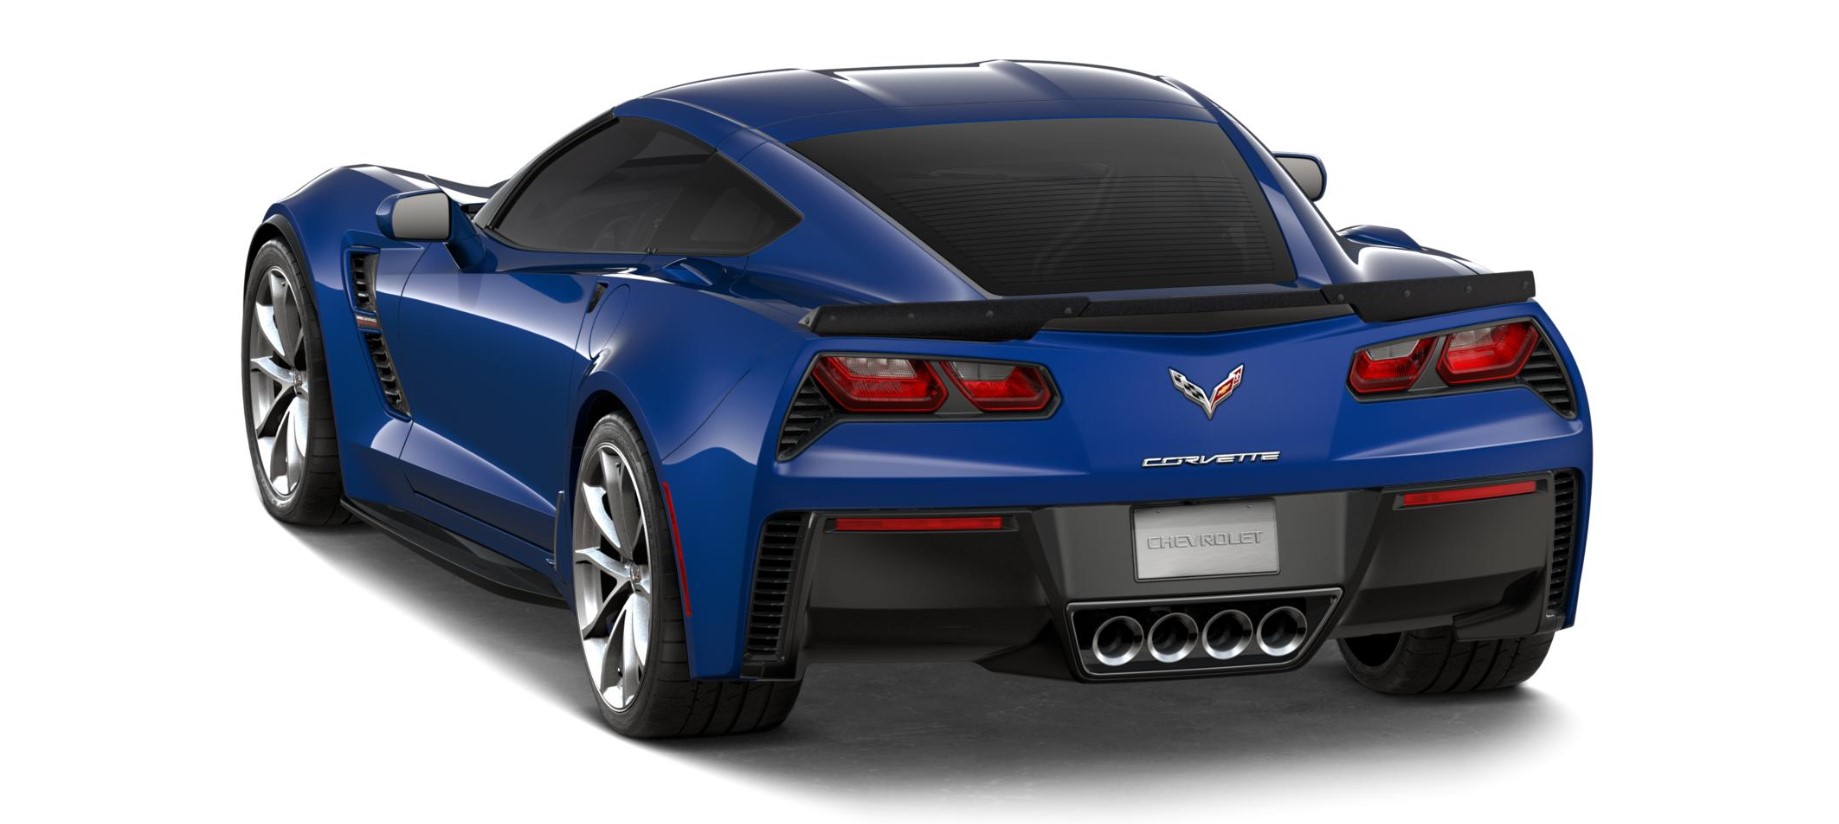 2018 Chevrolet Corvette Grand Sport Blue Rear Exterior